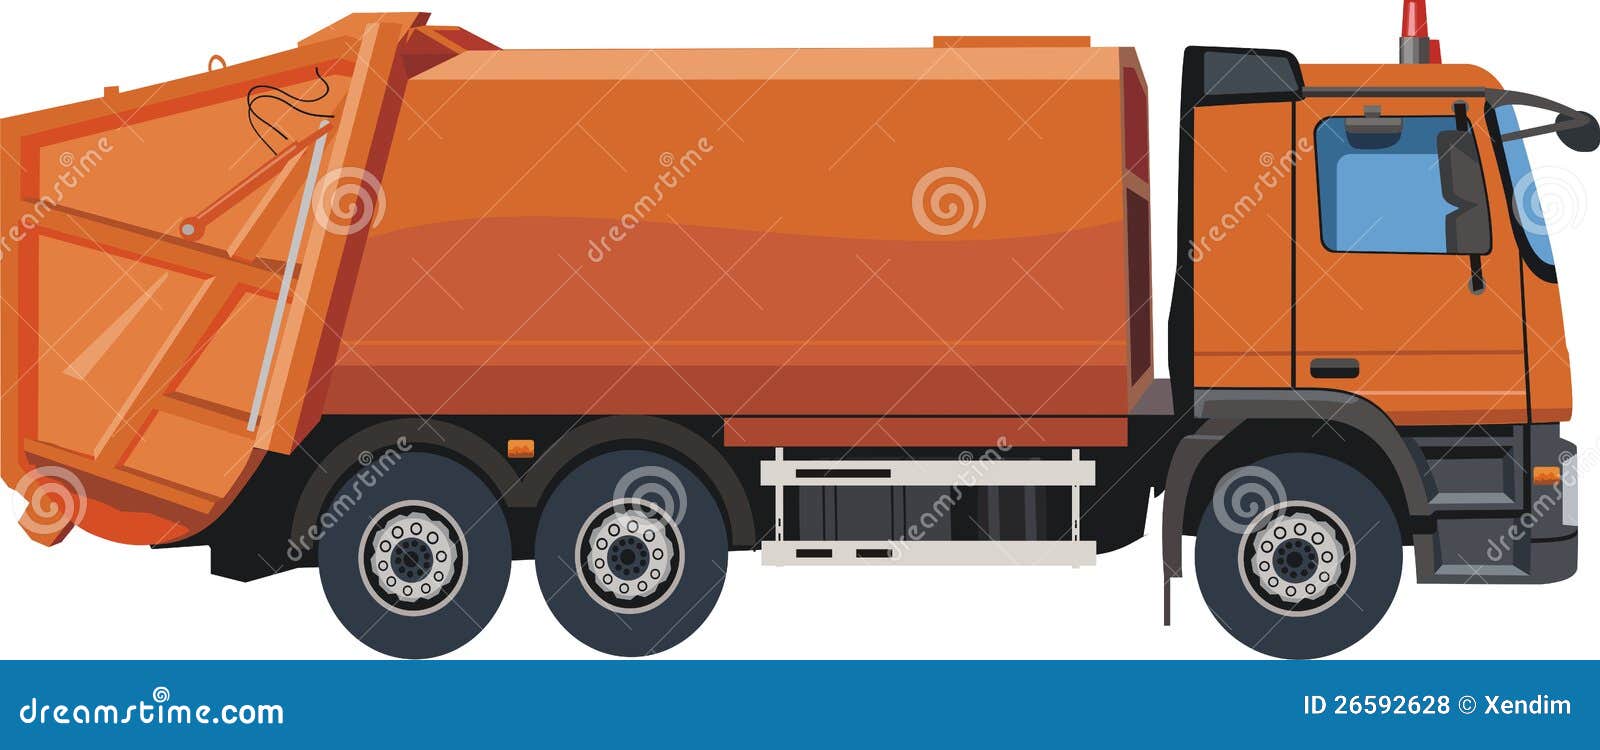 Orange Dump Truck Royalty Free Stock Photos - Image: 26592628